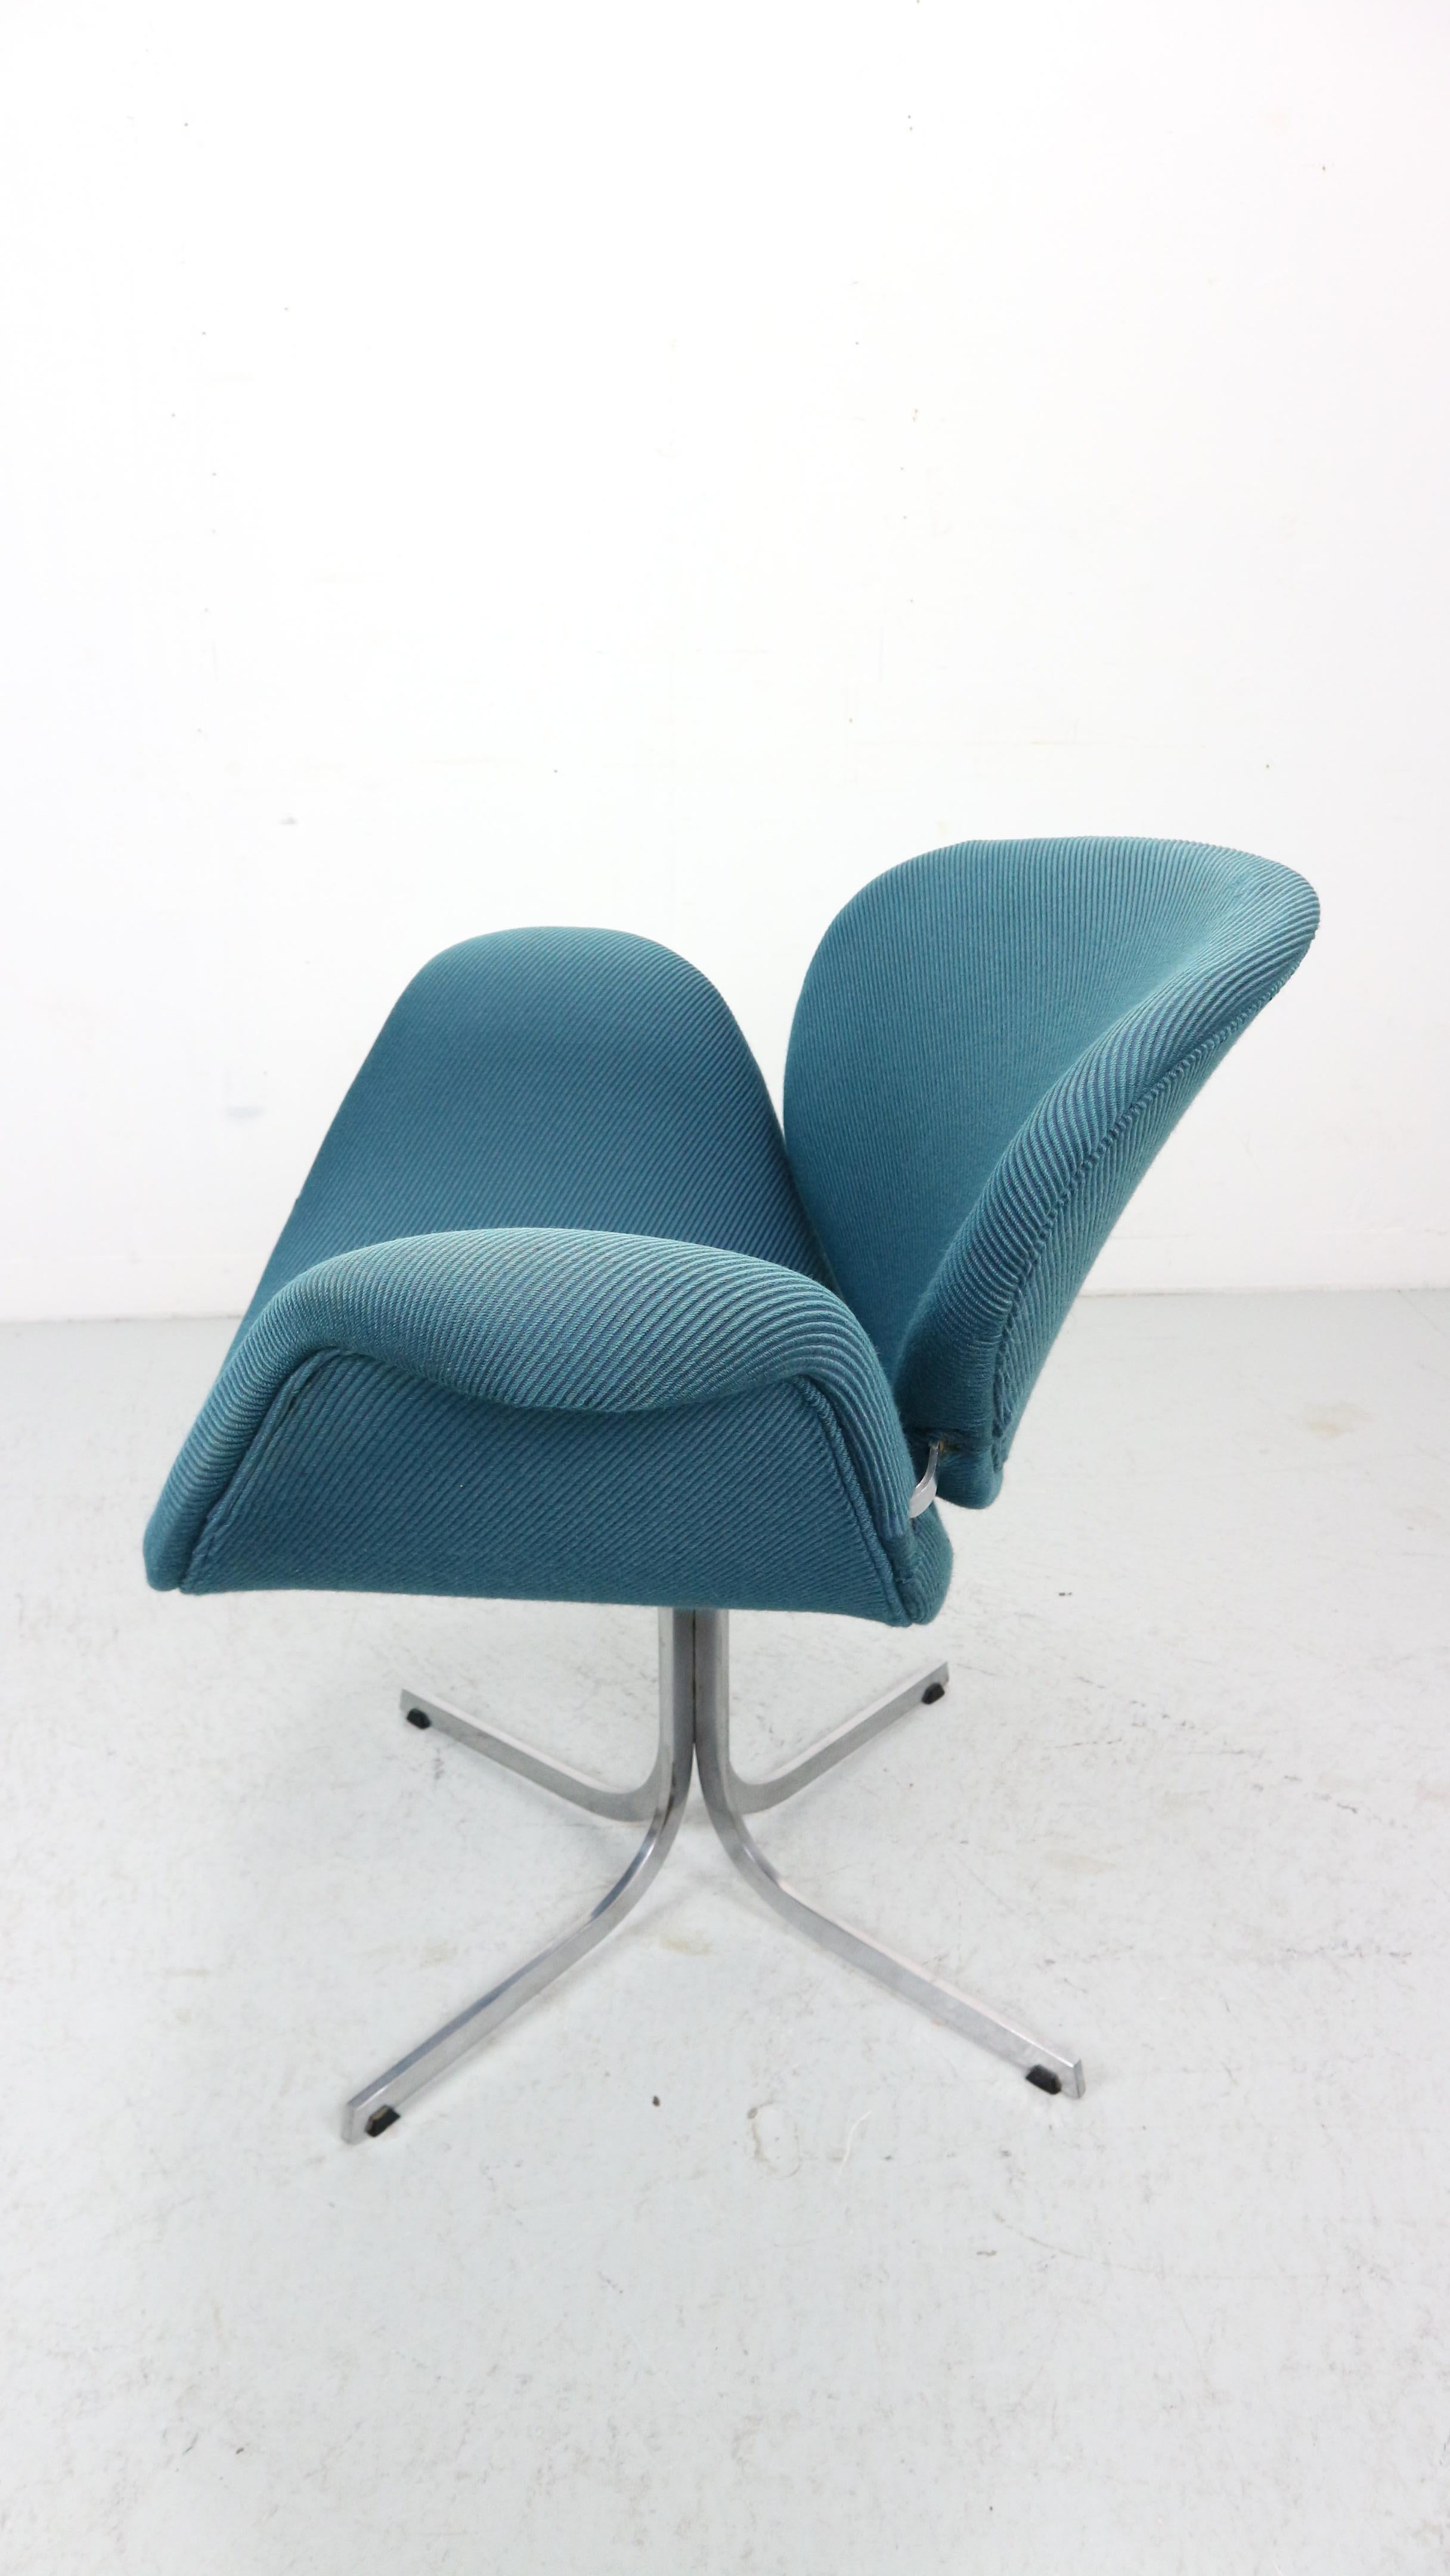 20th Century Vintage Pierre Paulin Tulip midi F549 chair 1960s by Artifort, Netherlands